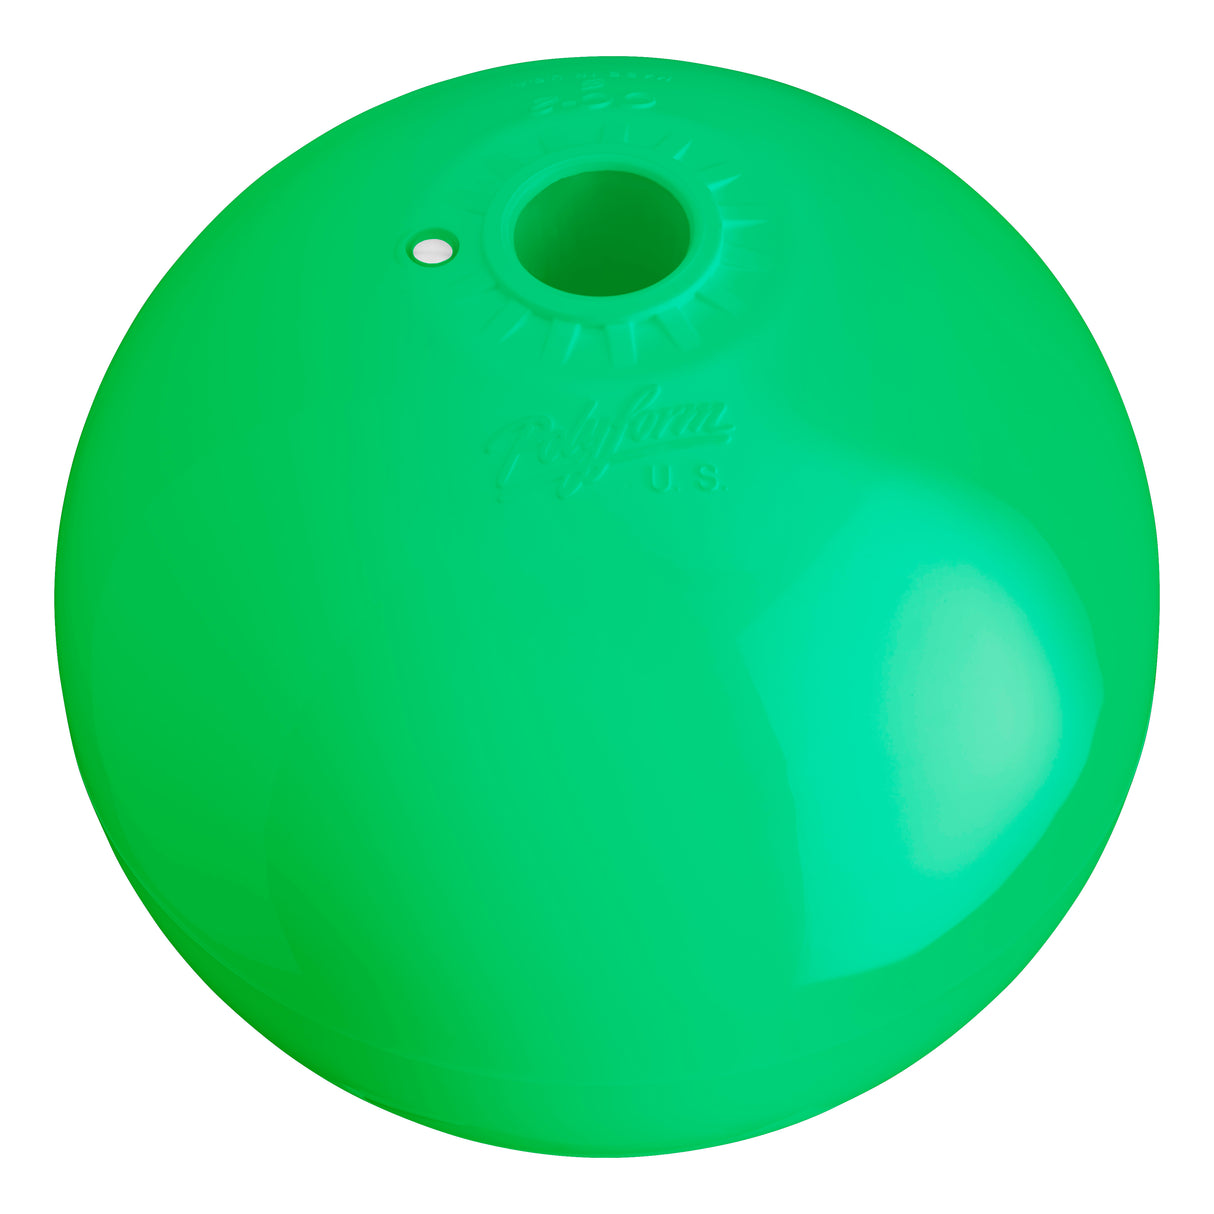 Hole through center mooring and marker buoy, Polyform CC-6 Green angled shot